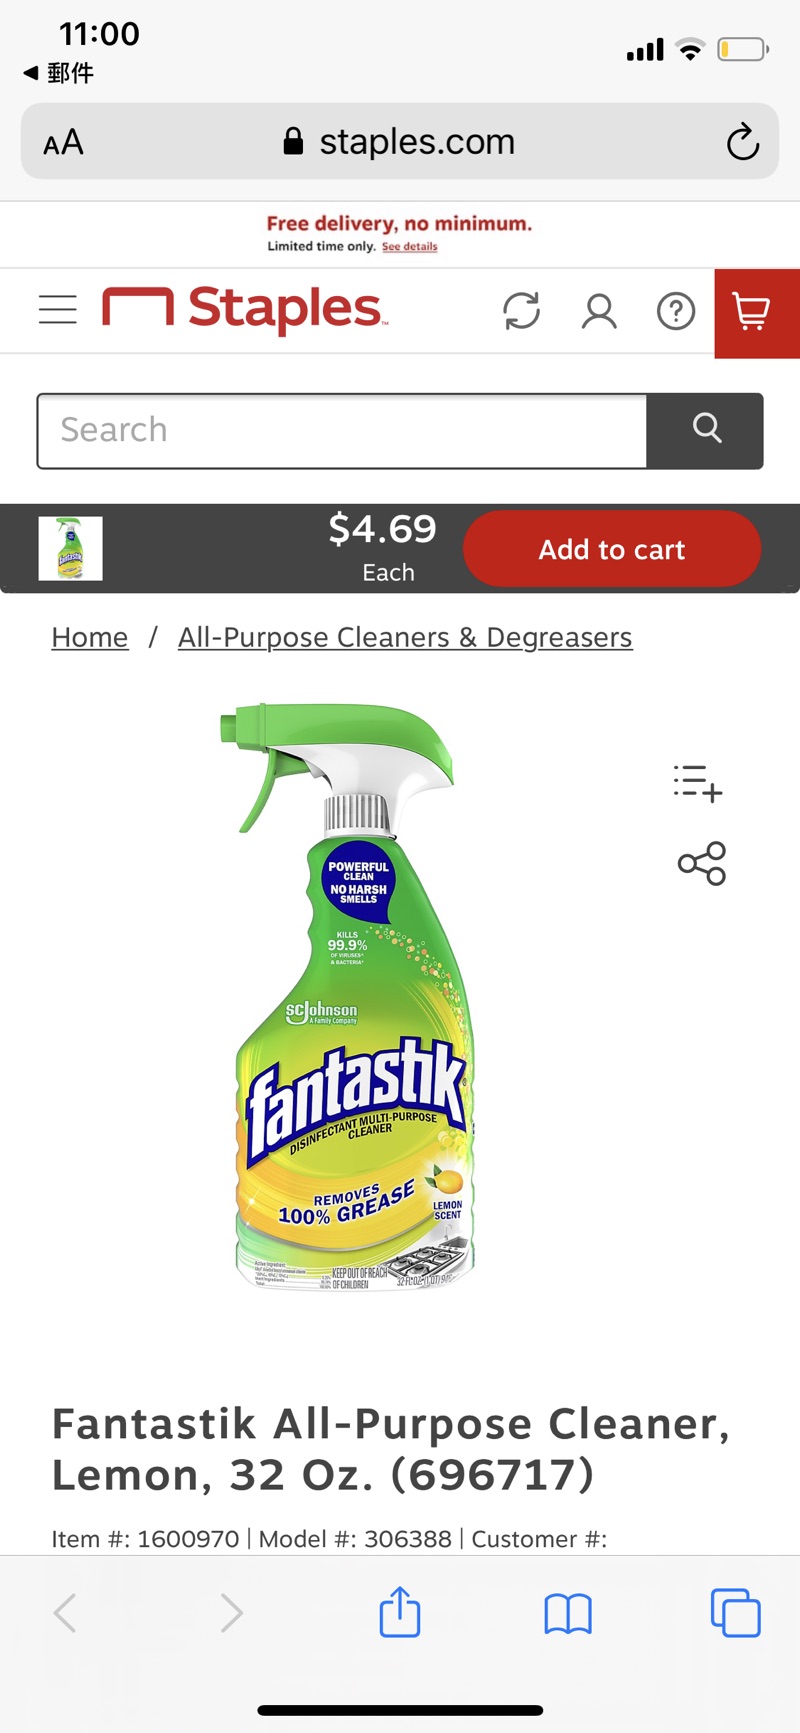 Fantastik® Scrubbing Bubbles® Lemon Power All Purpose Cleaner Spray, Lemon Scent, 32oz. at Staples多功能消毒杀菌喷雾